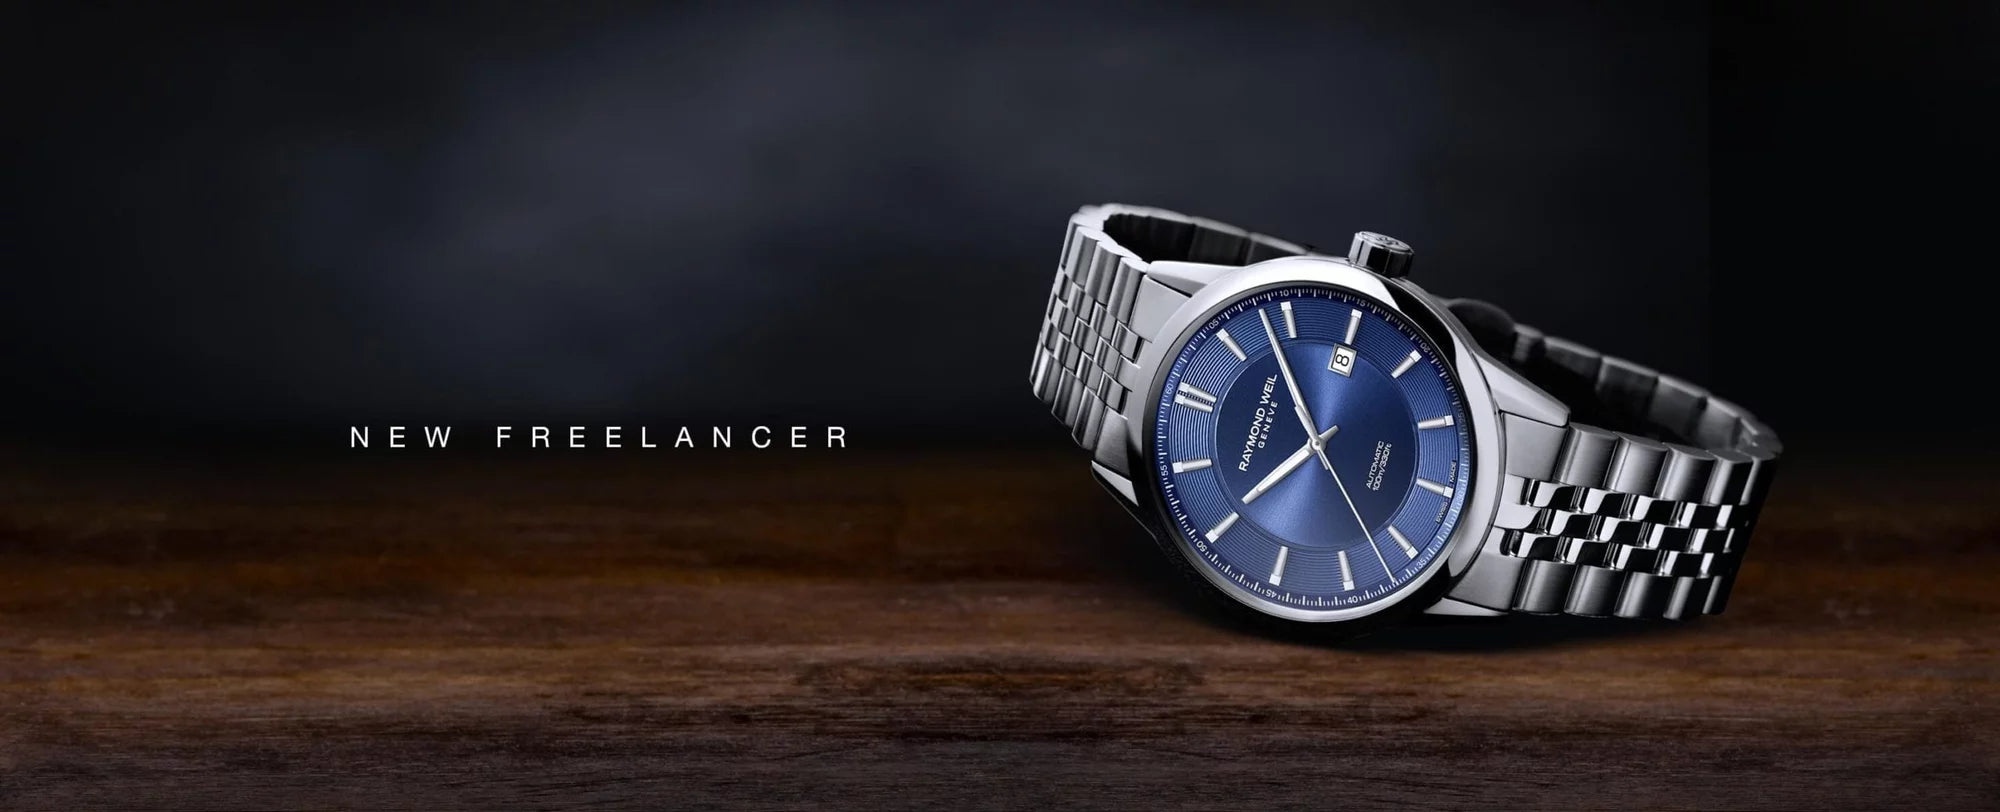 Freelancer Men's Classic Blue Automatic Date Watch